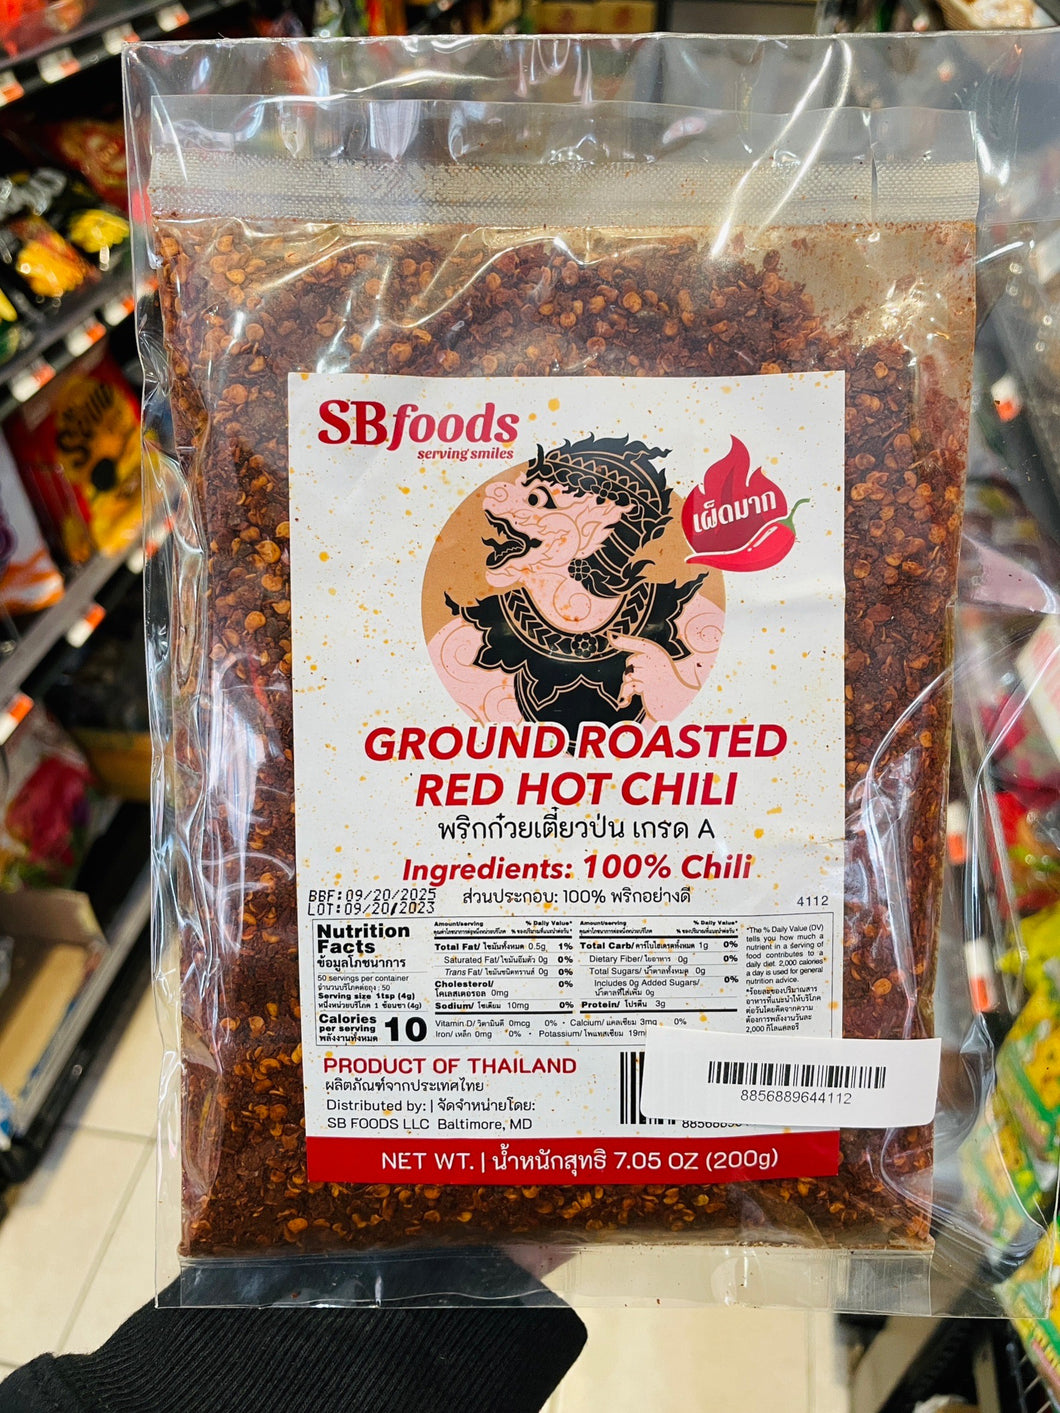 SB Foods - Ground Roasted Red Hot Chili (Premium) - พริกก๋วยเตี๋ยวป่นคั่ว อย่างดี